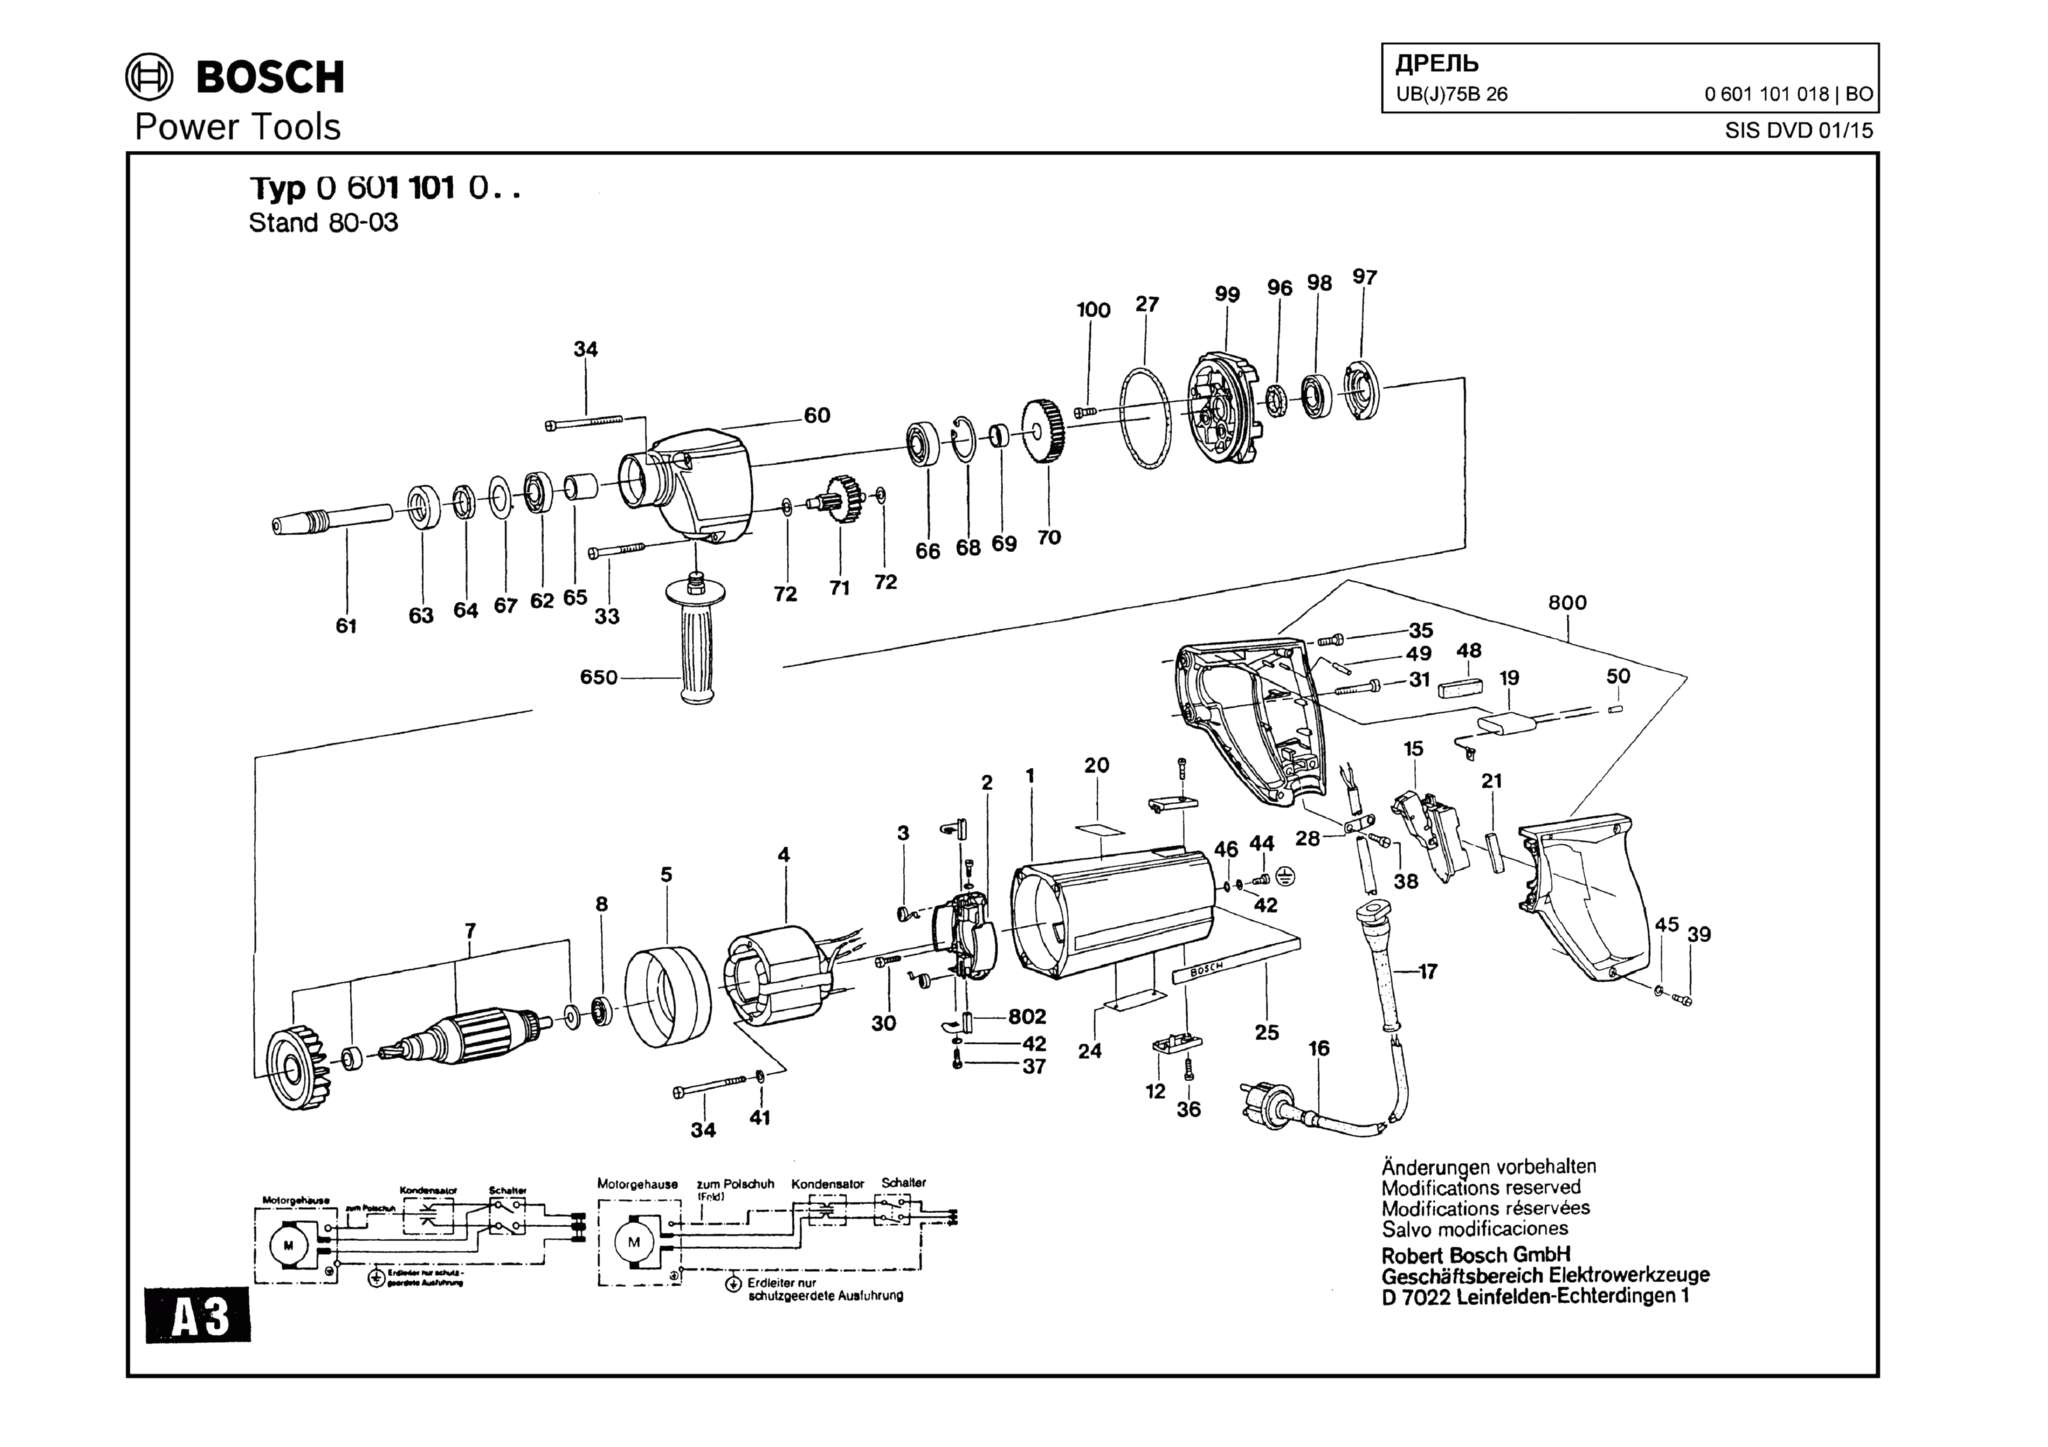 Запчасти, схема и деталировка Bosch UB(J)75B 26 (ТИП 0601101018)